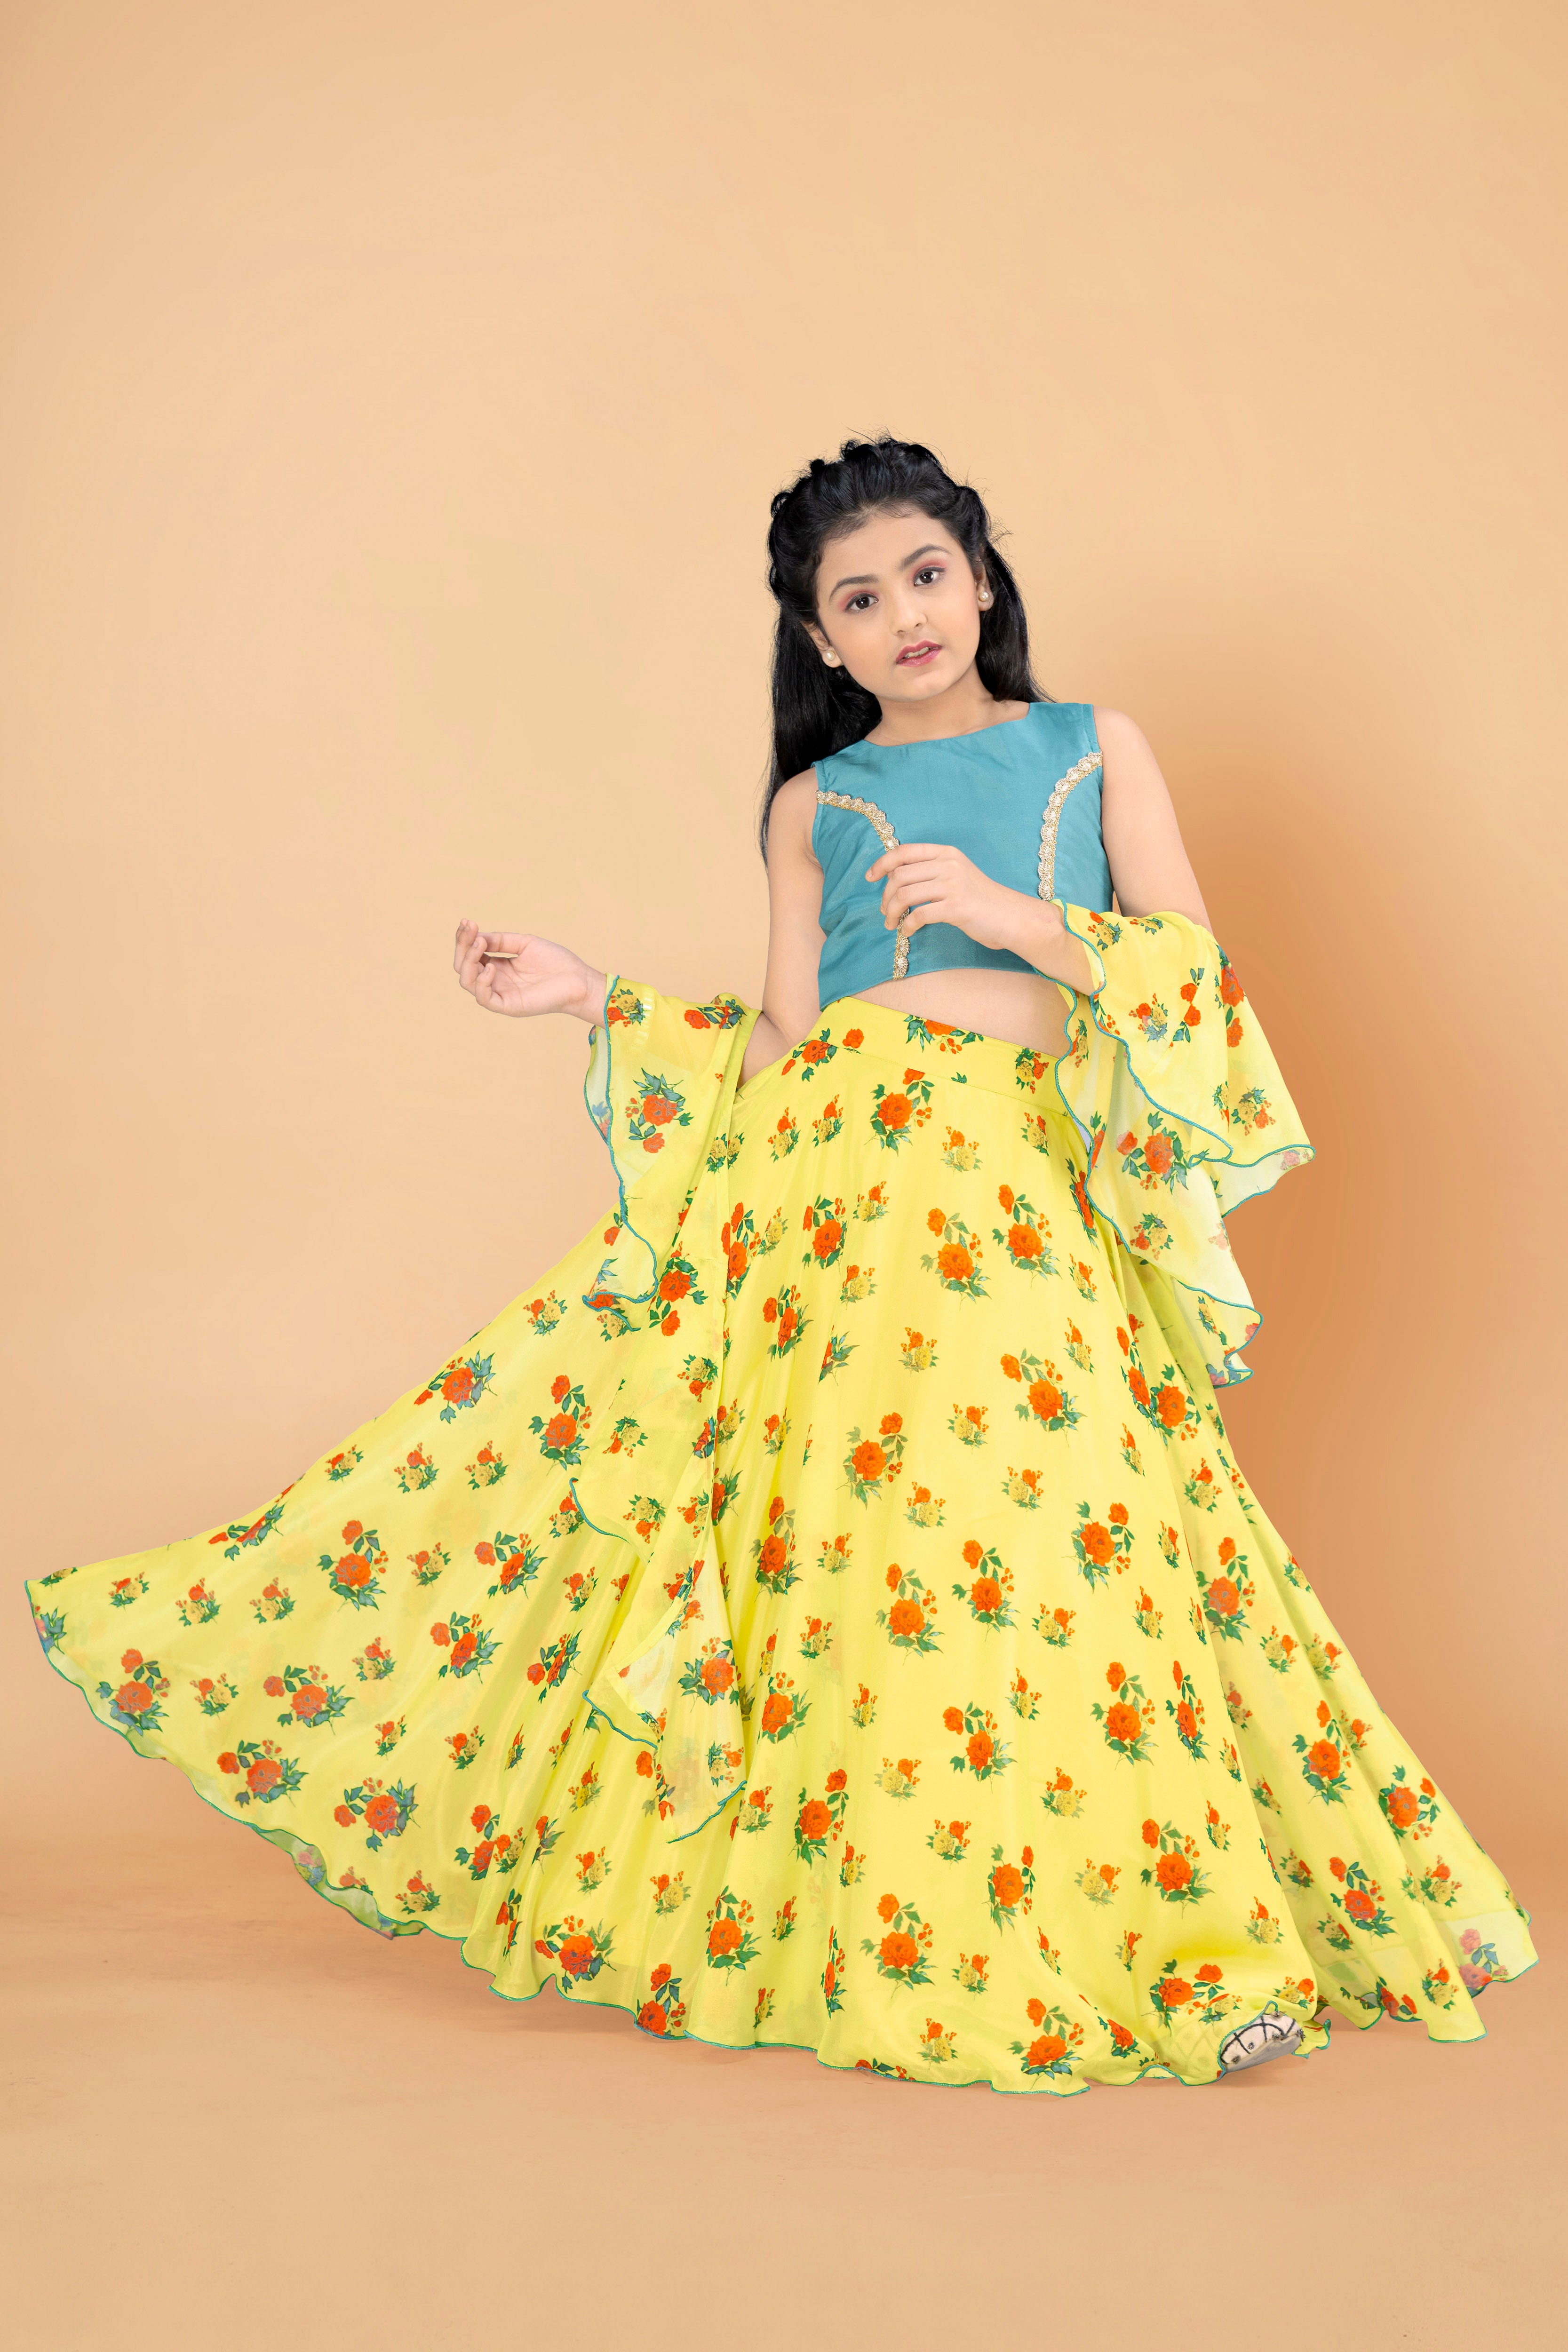 Zmac.com.bd : Readymade lehenga embroidery party dress